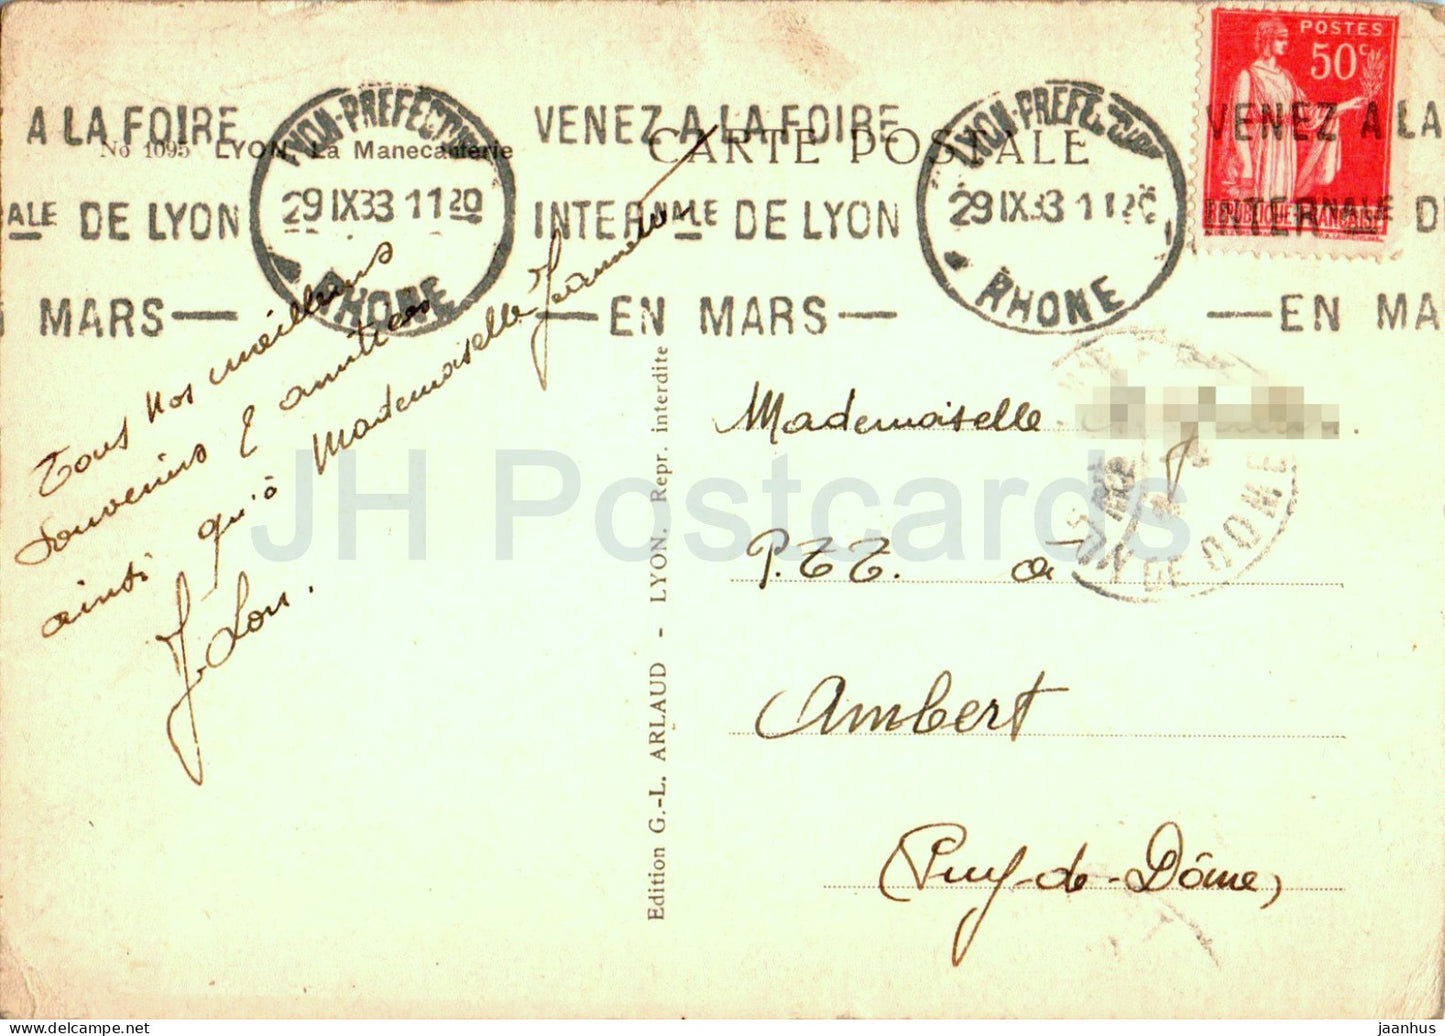 Lyon - La Manecanterie - 1095 - alte Postkarte - 1933 - Frankreich - gebraucht 